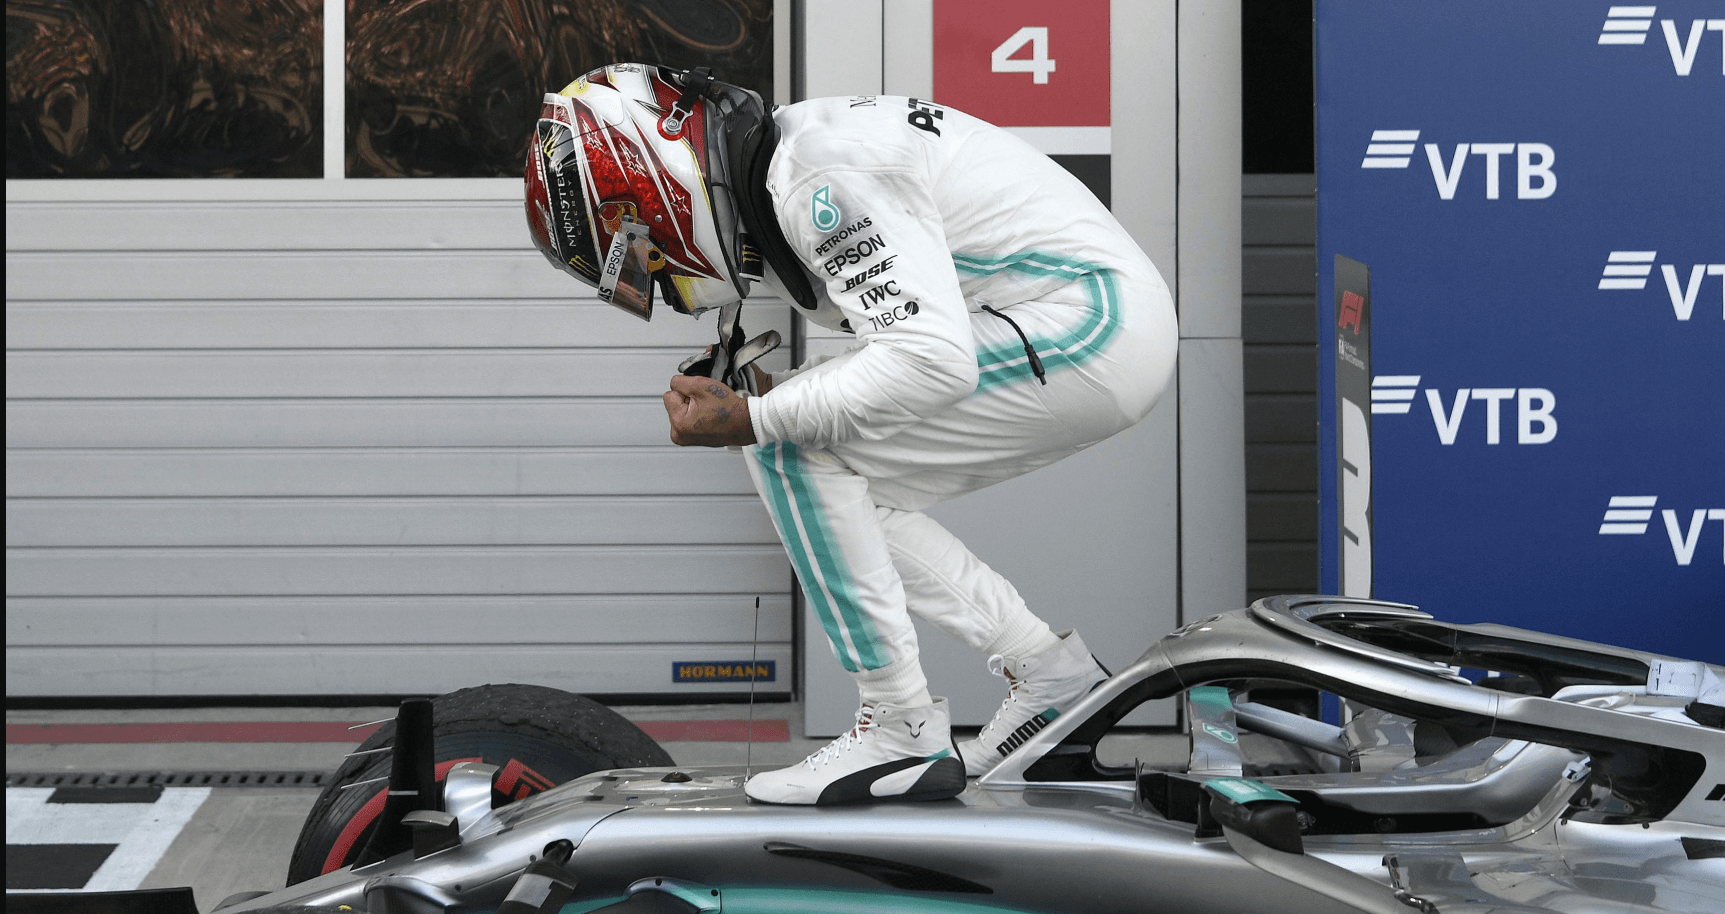 Hamilton iskoristio svađu u Ferrariju